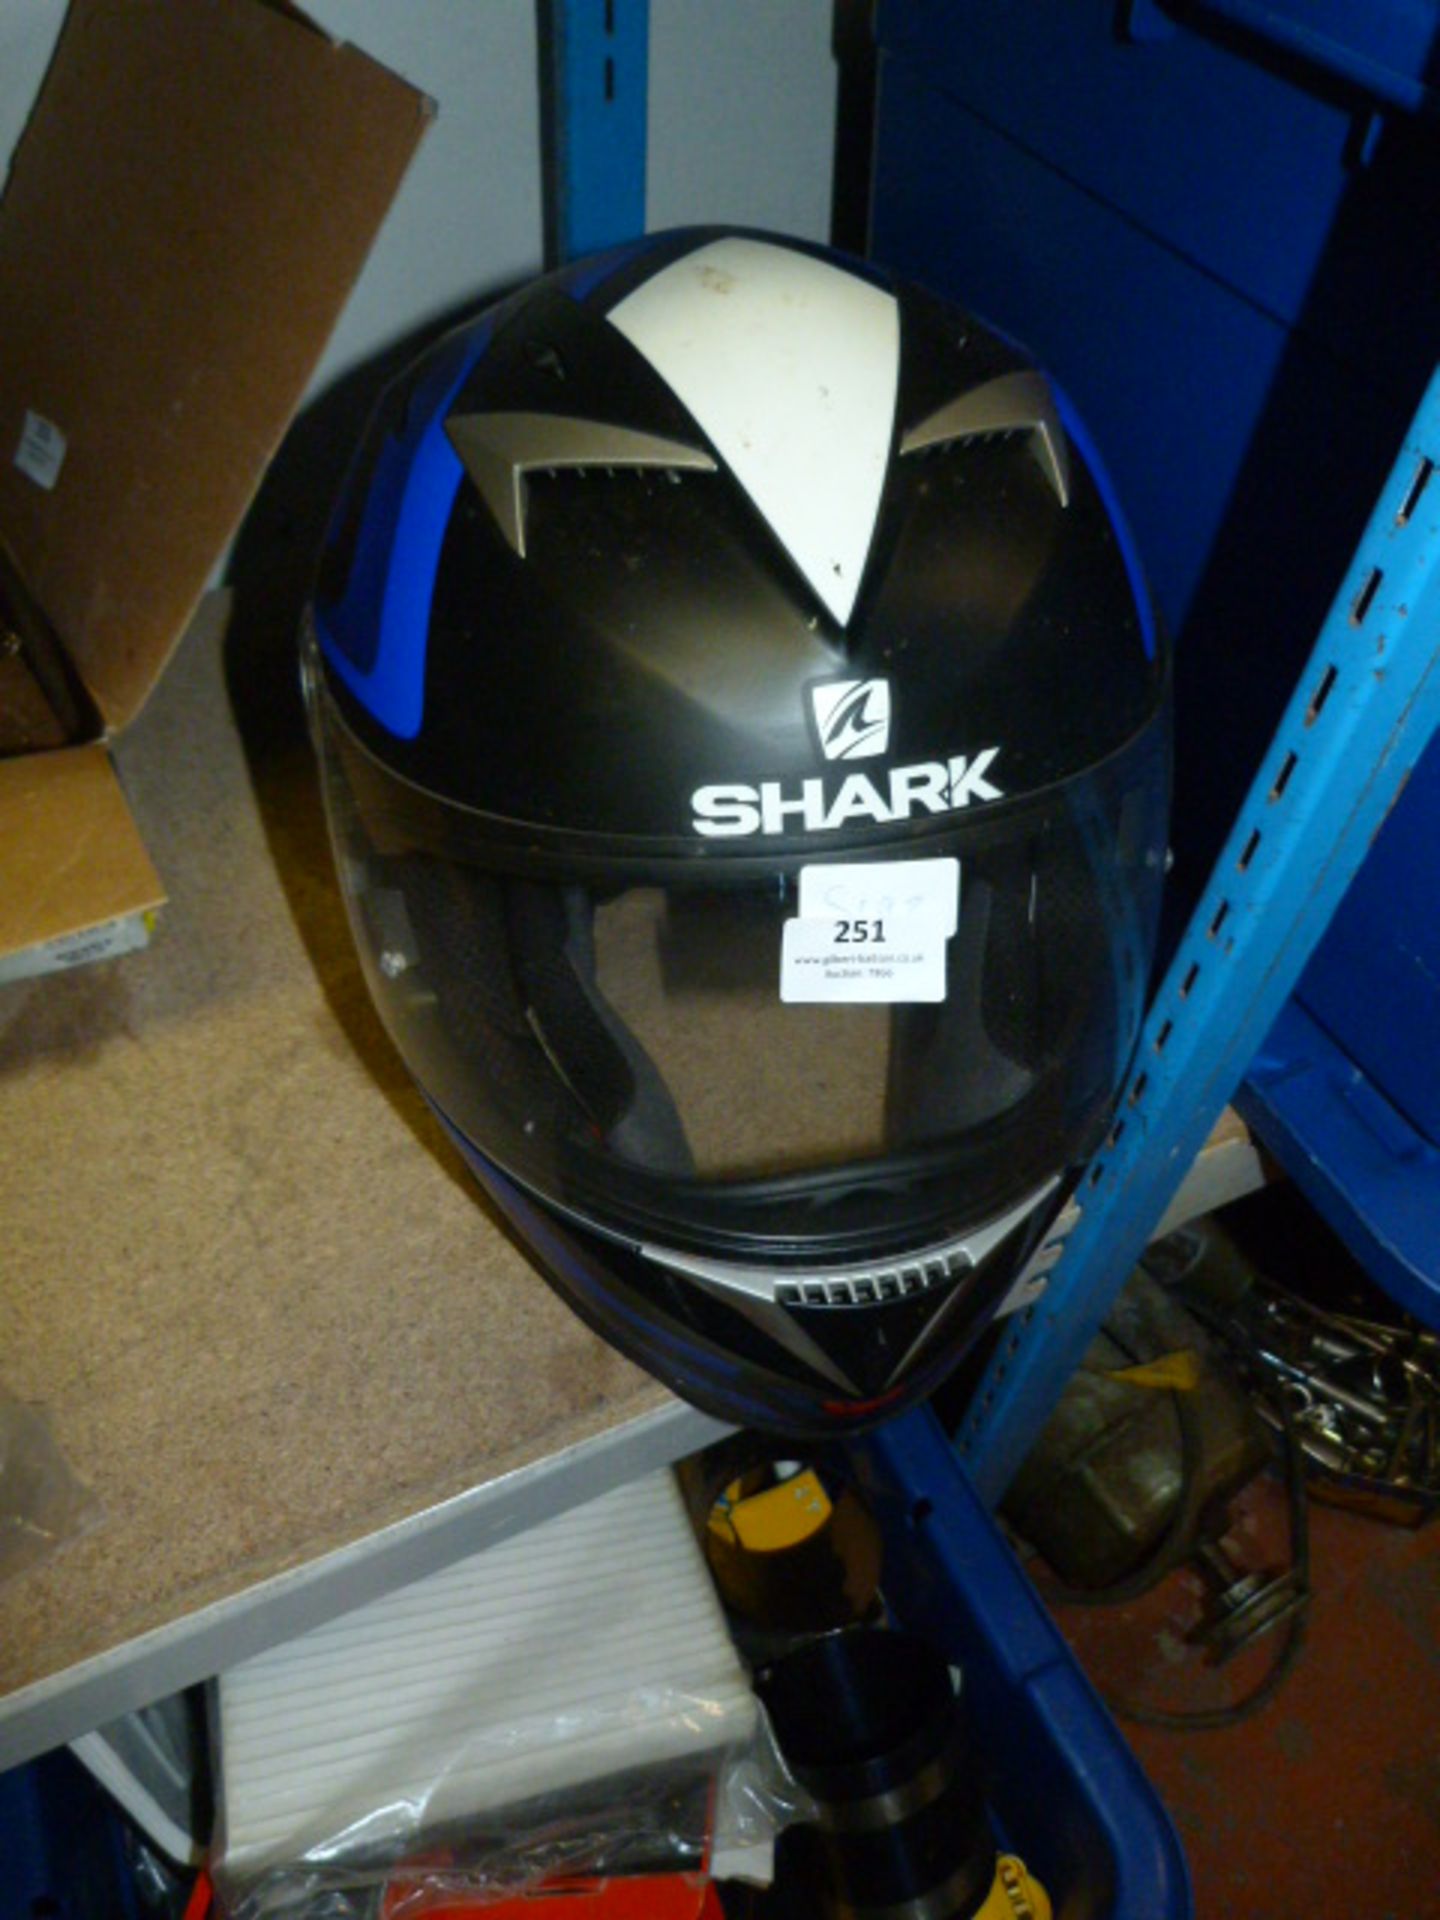 Shark Motorcycle Helmet